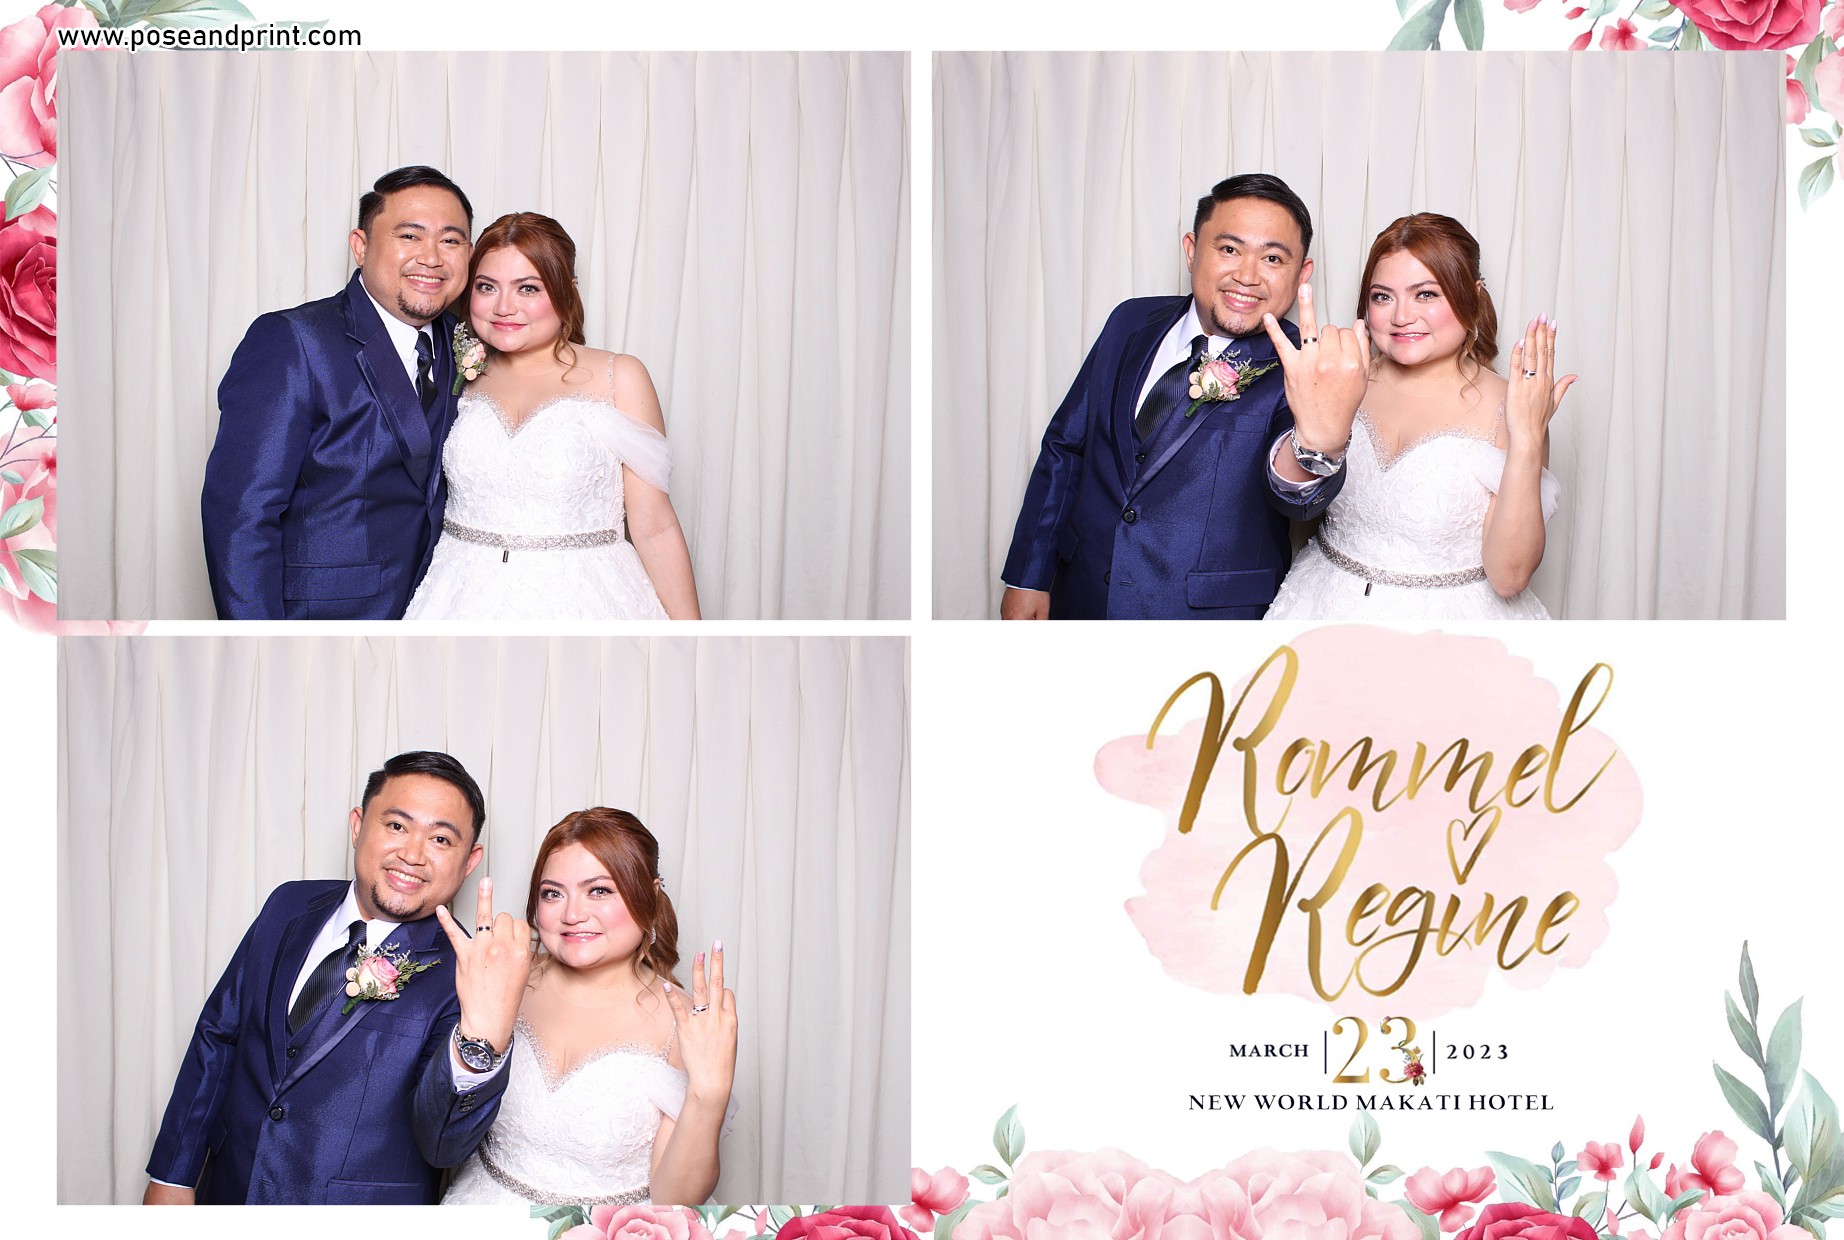 Rommel and Regine’s Wedding